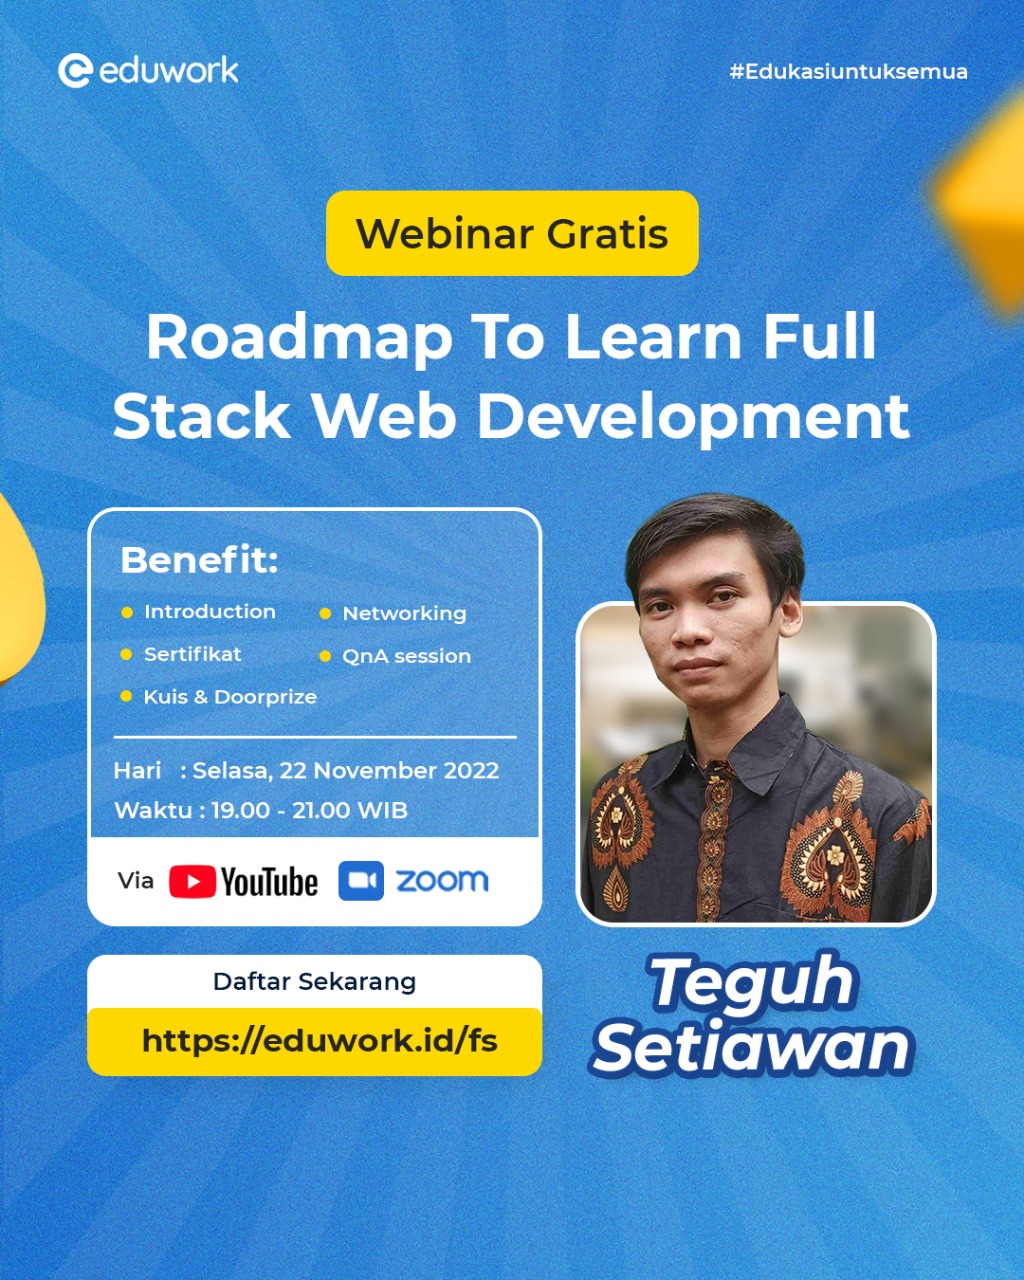 Hero Image - Roadmap To Learn Full Stack Web Development